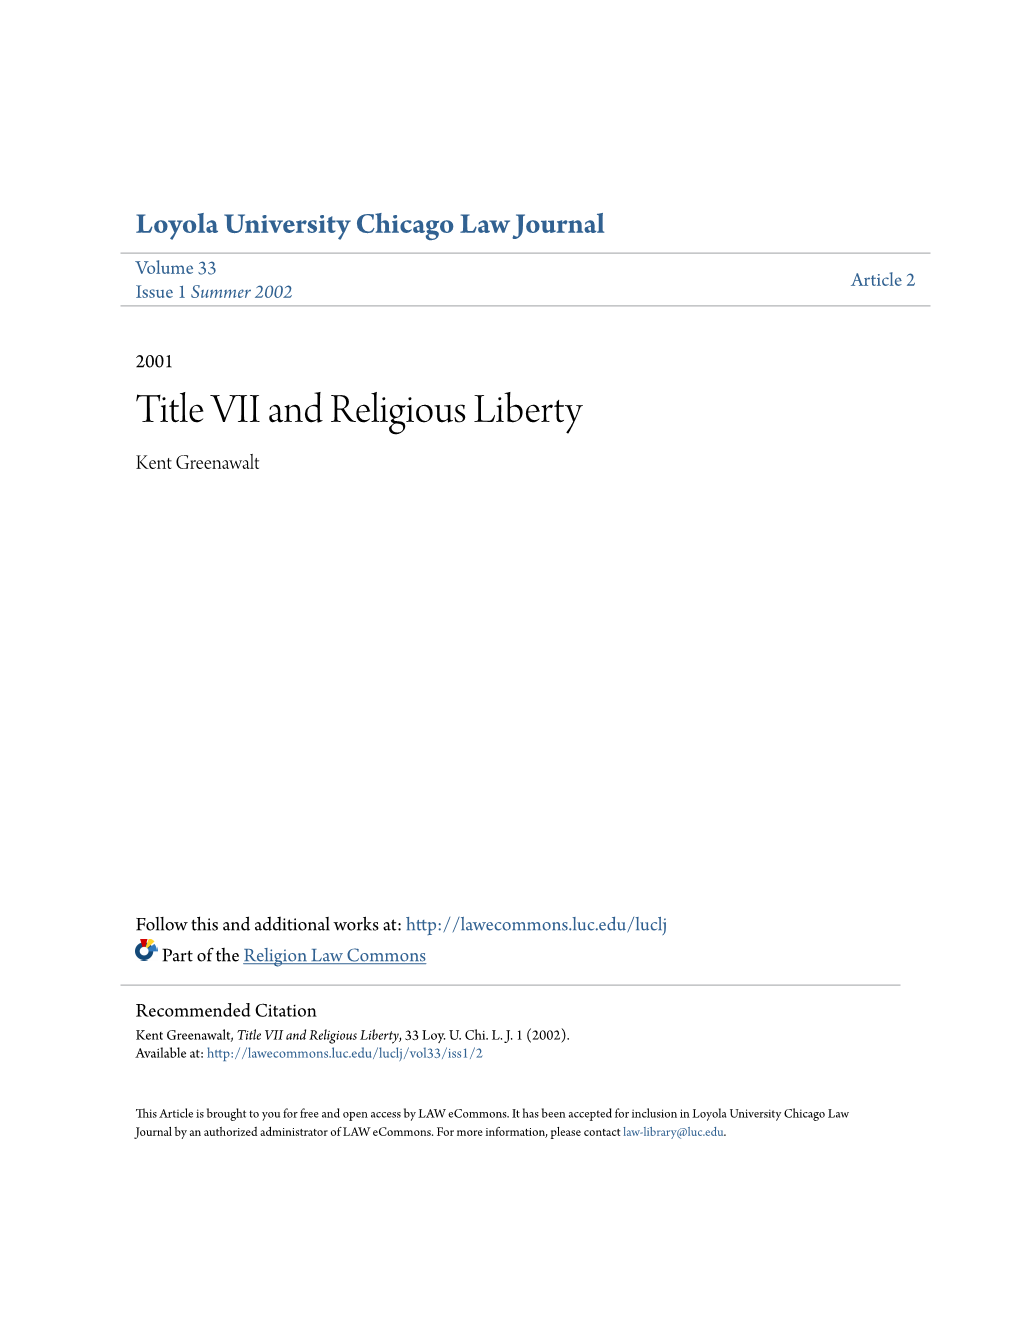 Title VII and Religious Liberty Kent Greenawalt